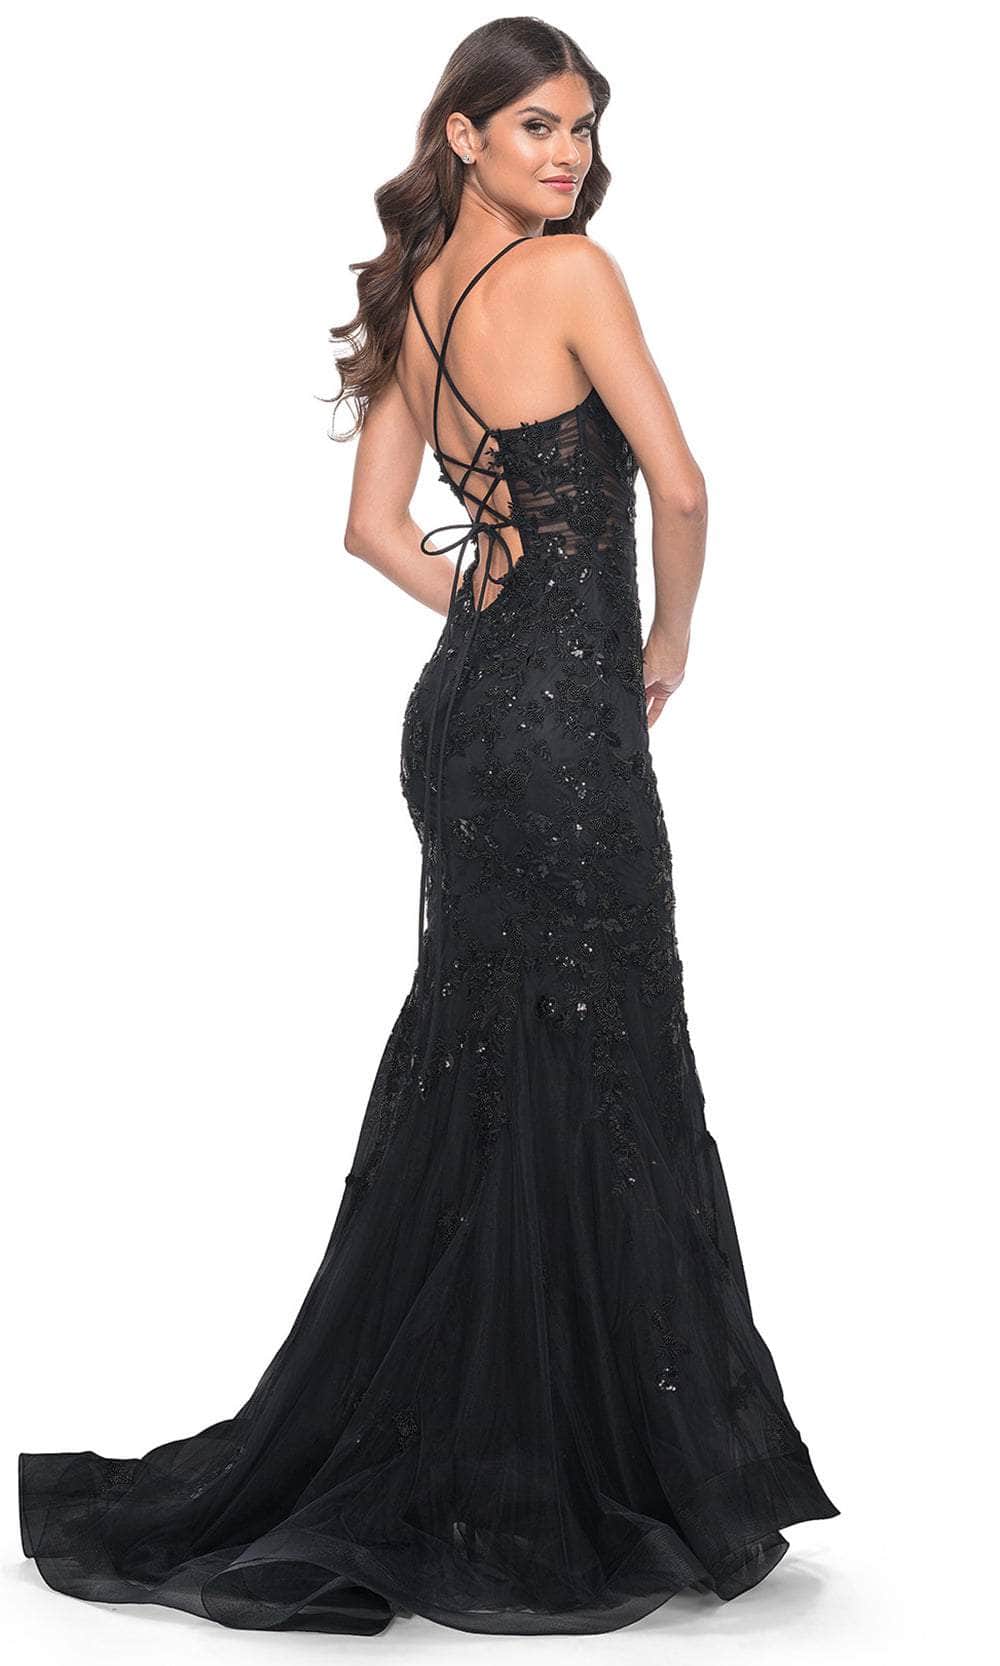 Image of La Femme 32033 - Beaded Appliqued Mermaid Prom Dress